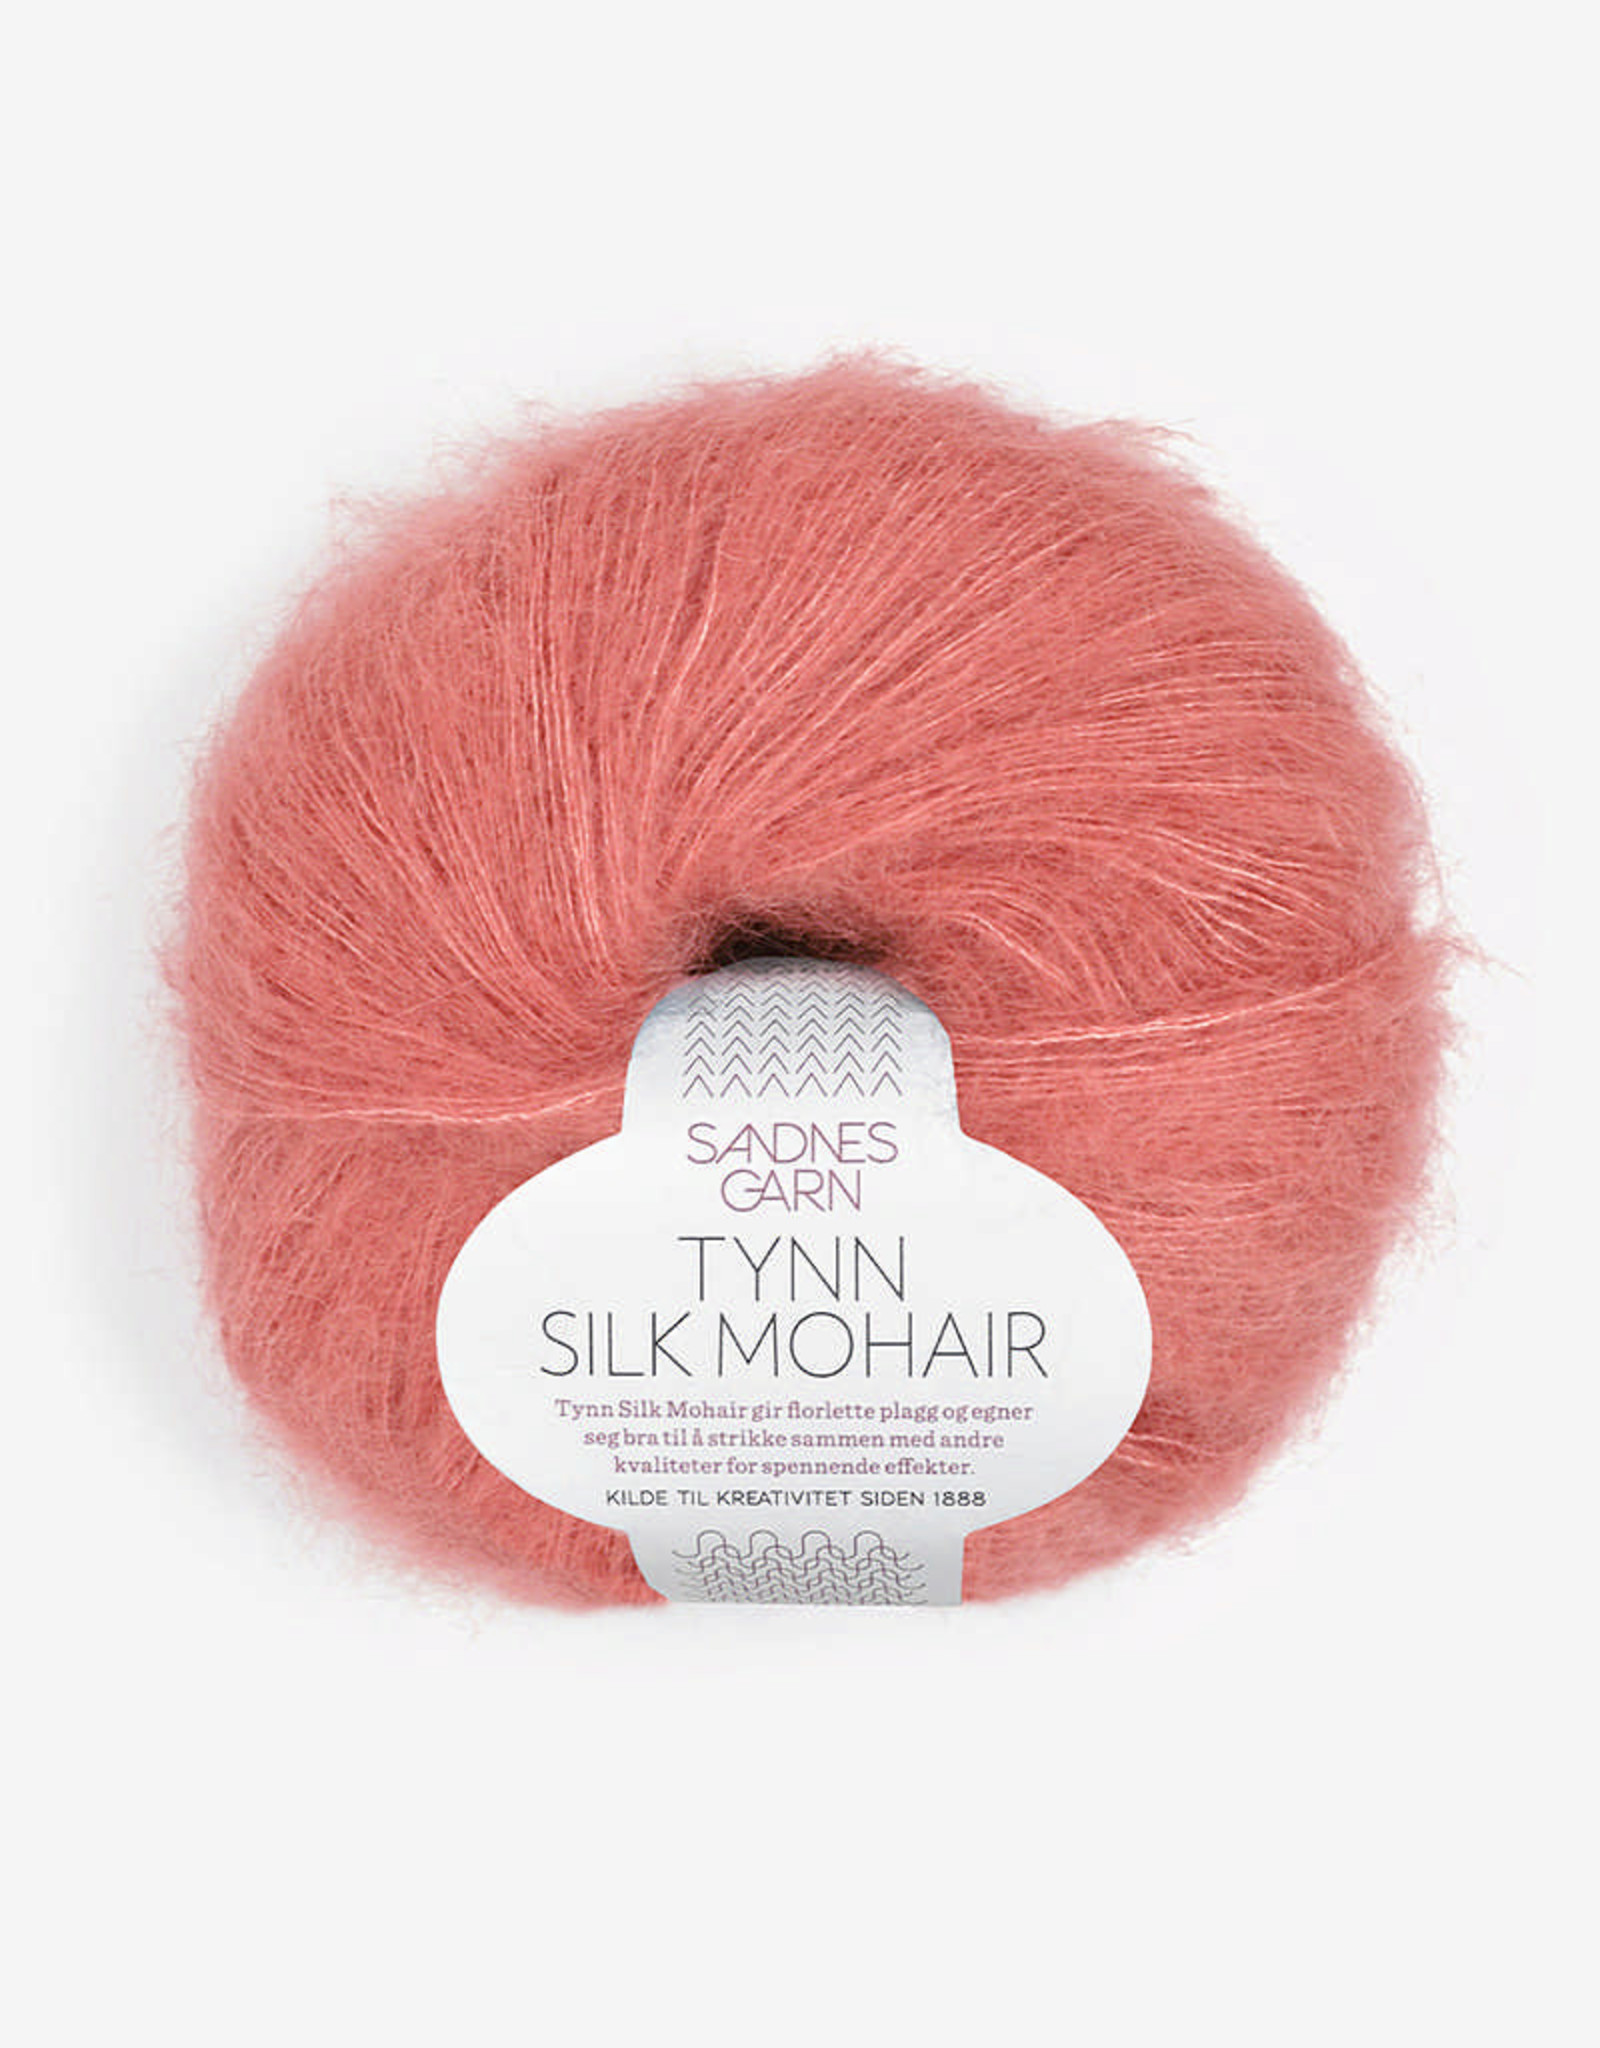 Stevenson skrige Lege med Tynn Silk Mohair 4025 light sienna - The Blue Purl - Yarn and Knitting Shop